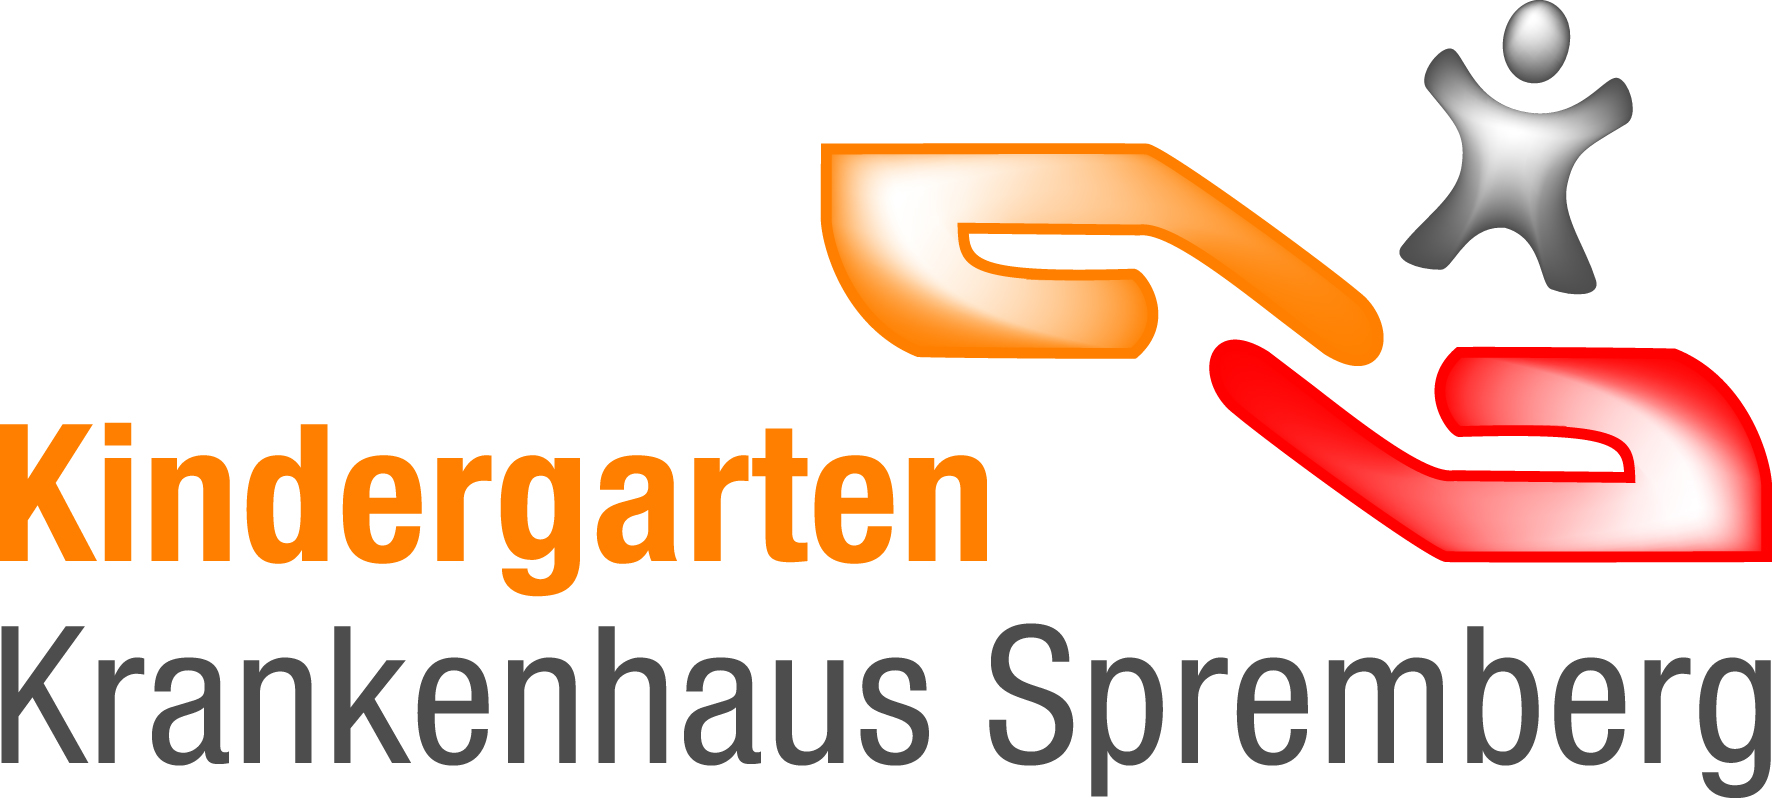 Kindergarten Krankenhaus Spremberg